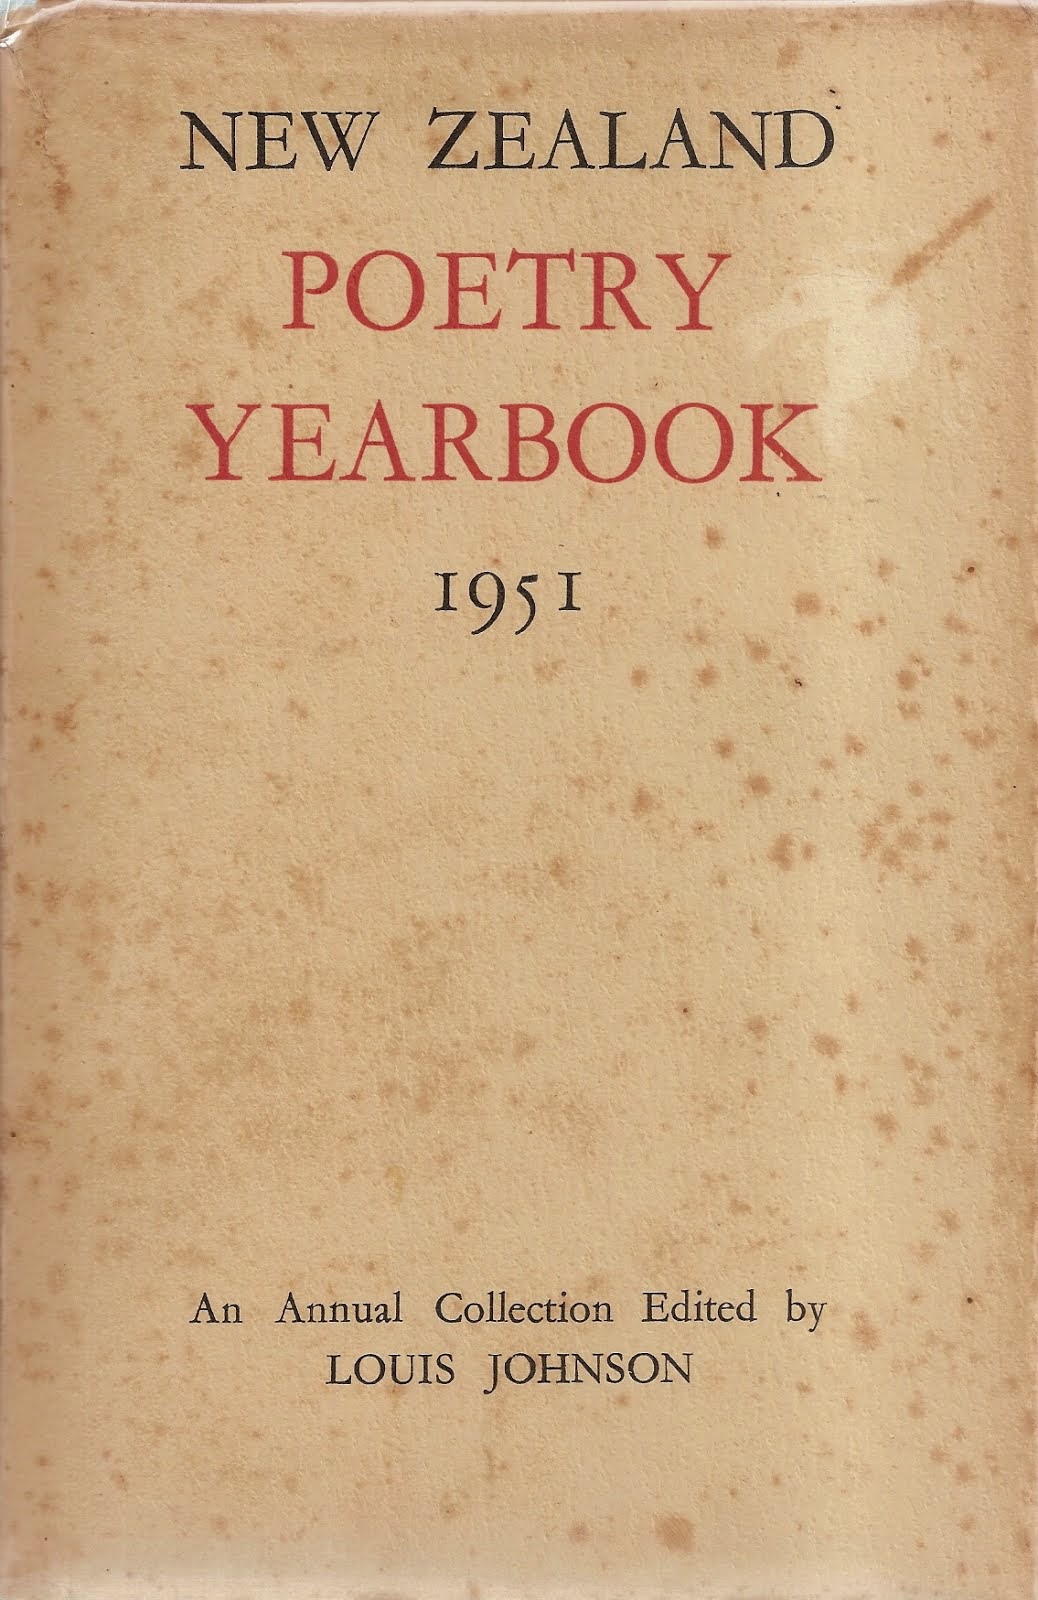 NZ Poetry Yearbook 1